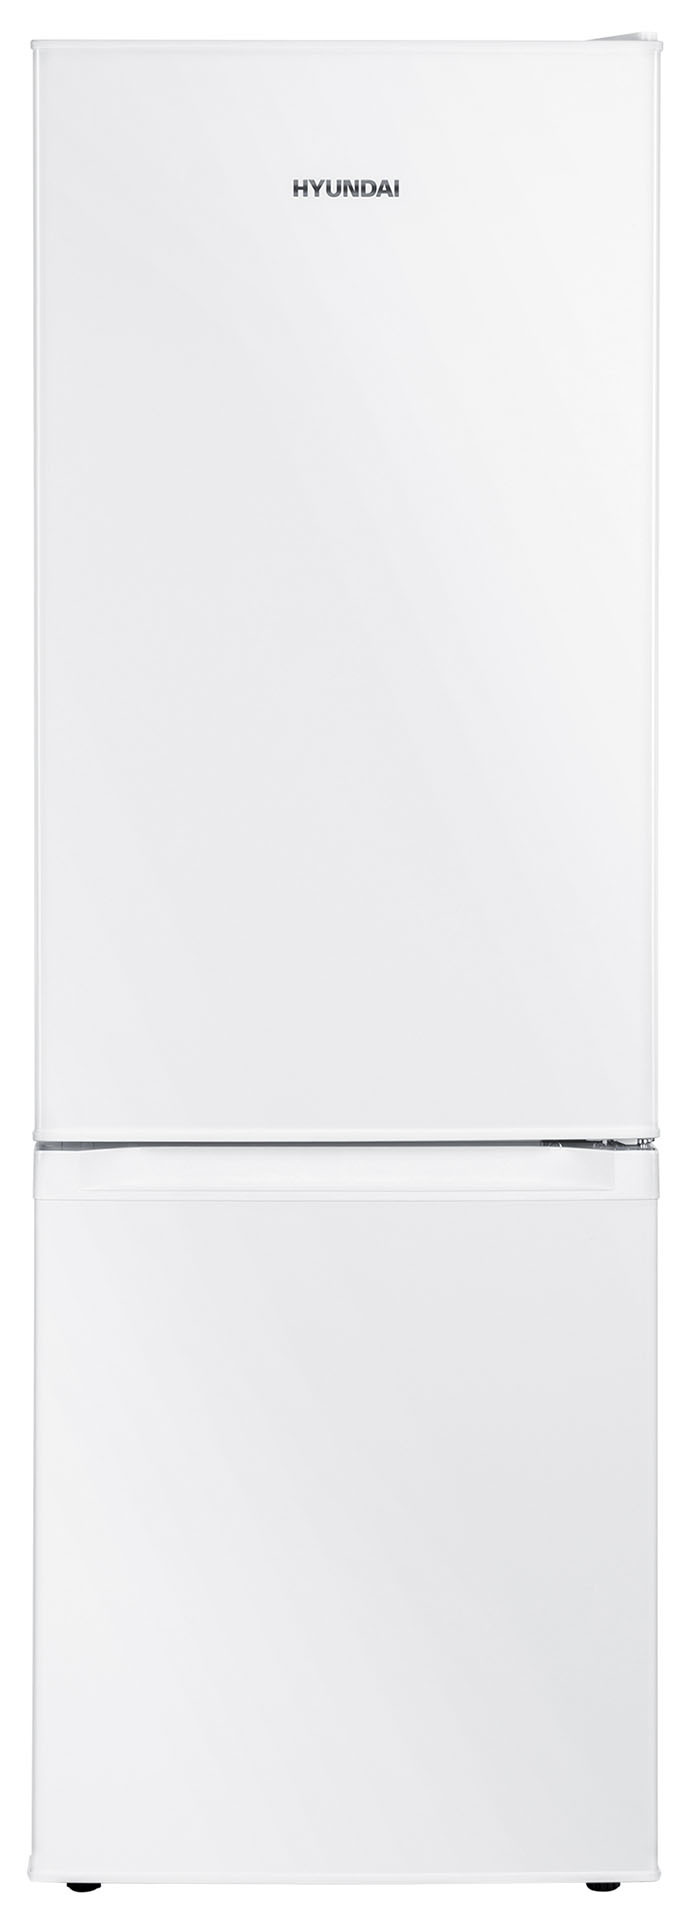 Холодильник HYUNDAI CC2051WT белый холодильник hyundai cs5073fv